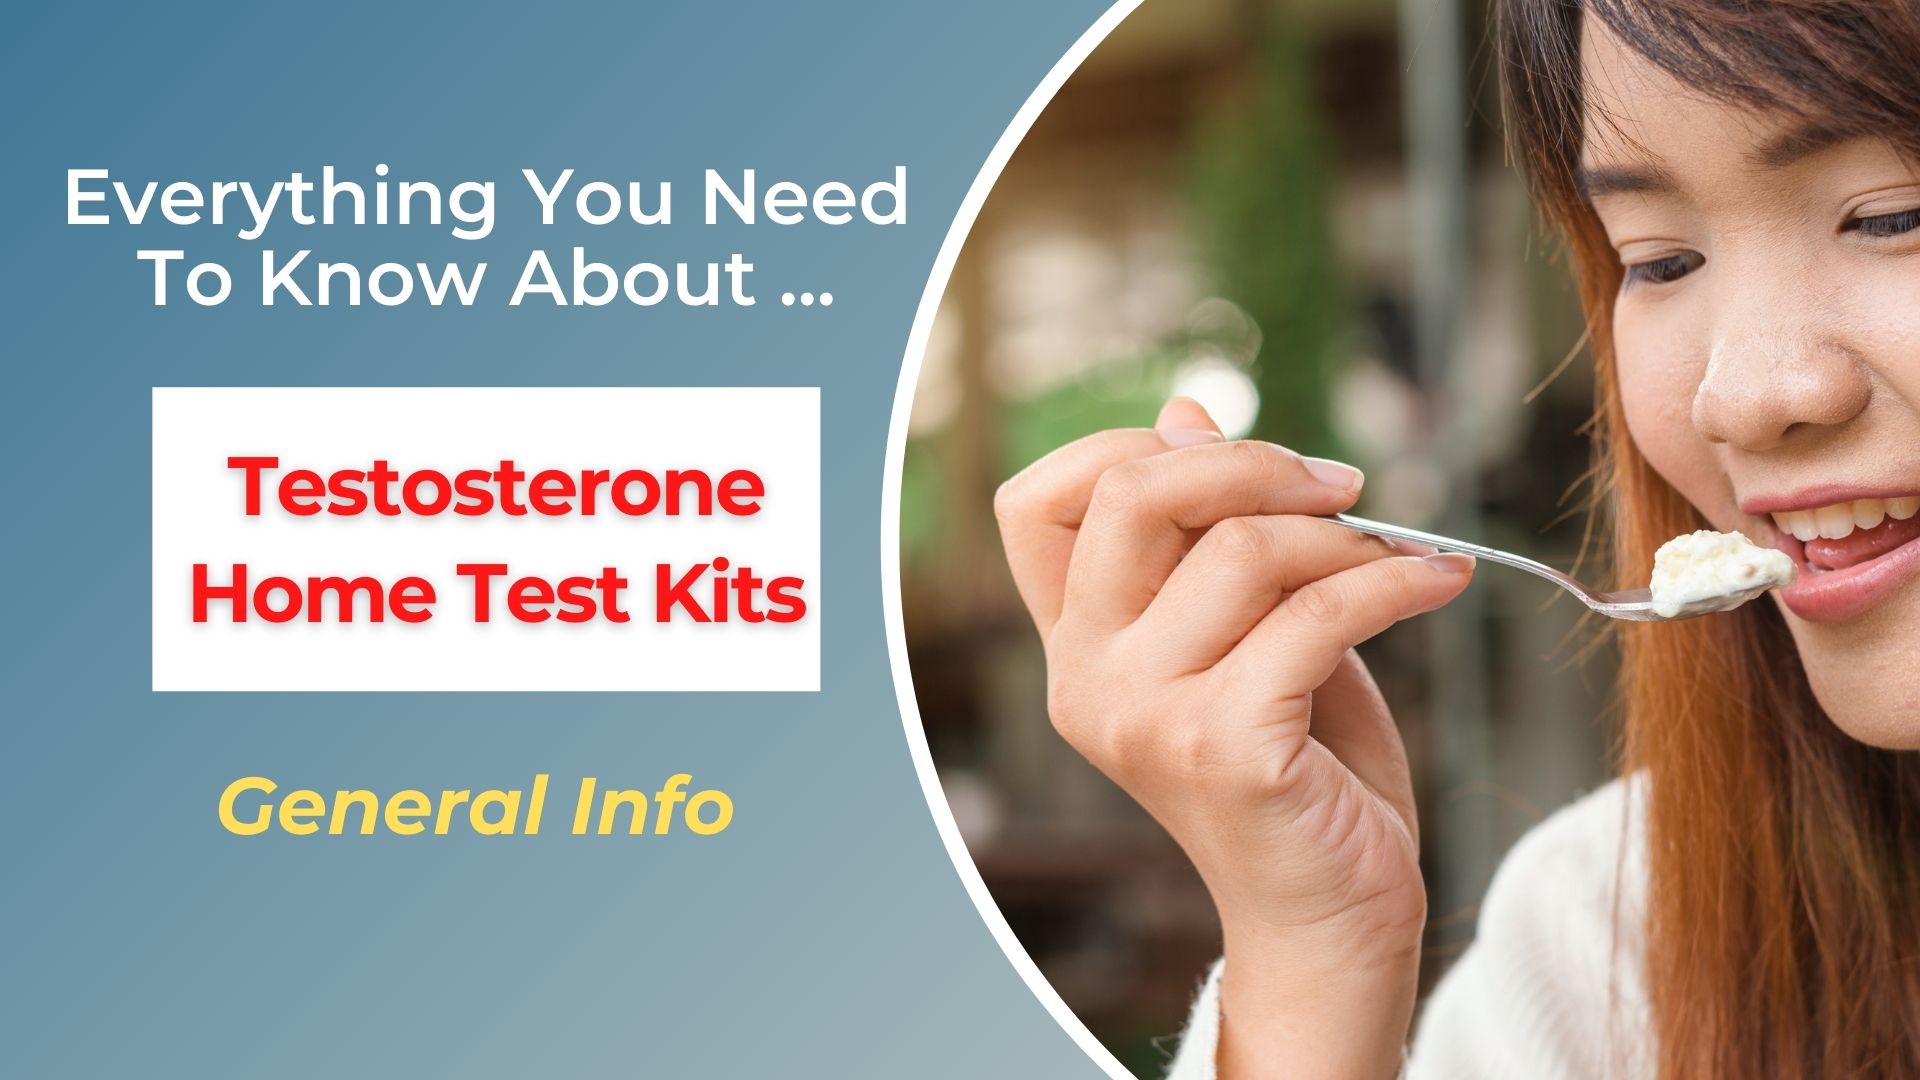 Testosterone Home Test Kits